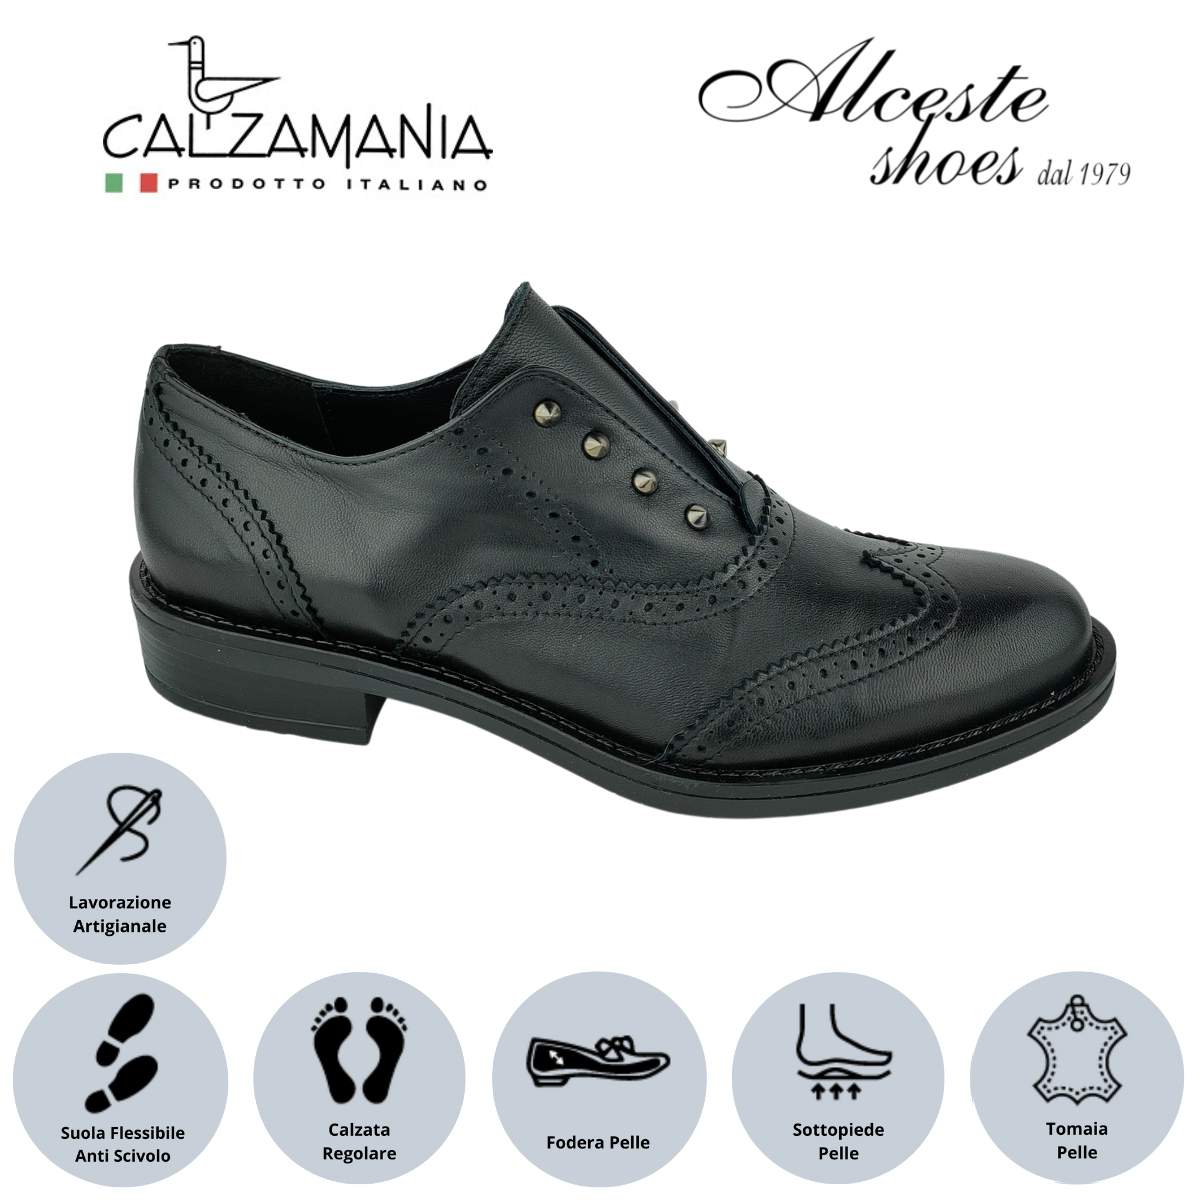 Francesina Donna con Elastico "Calzamania" Art. 1010 in Pelle Nero Alceste Shoes 22